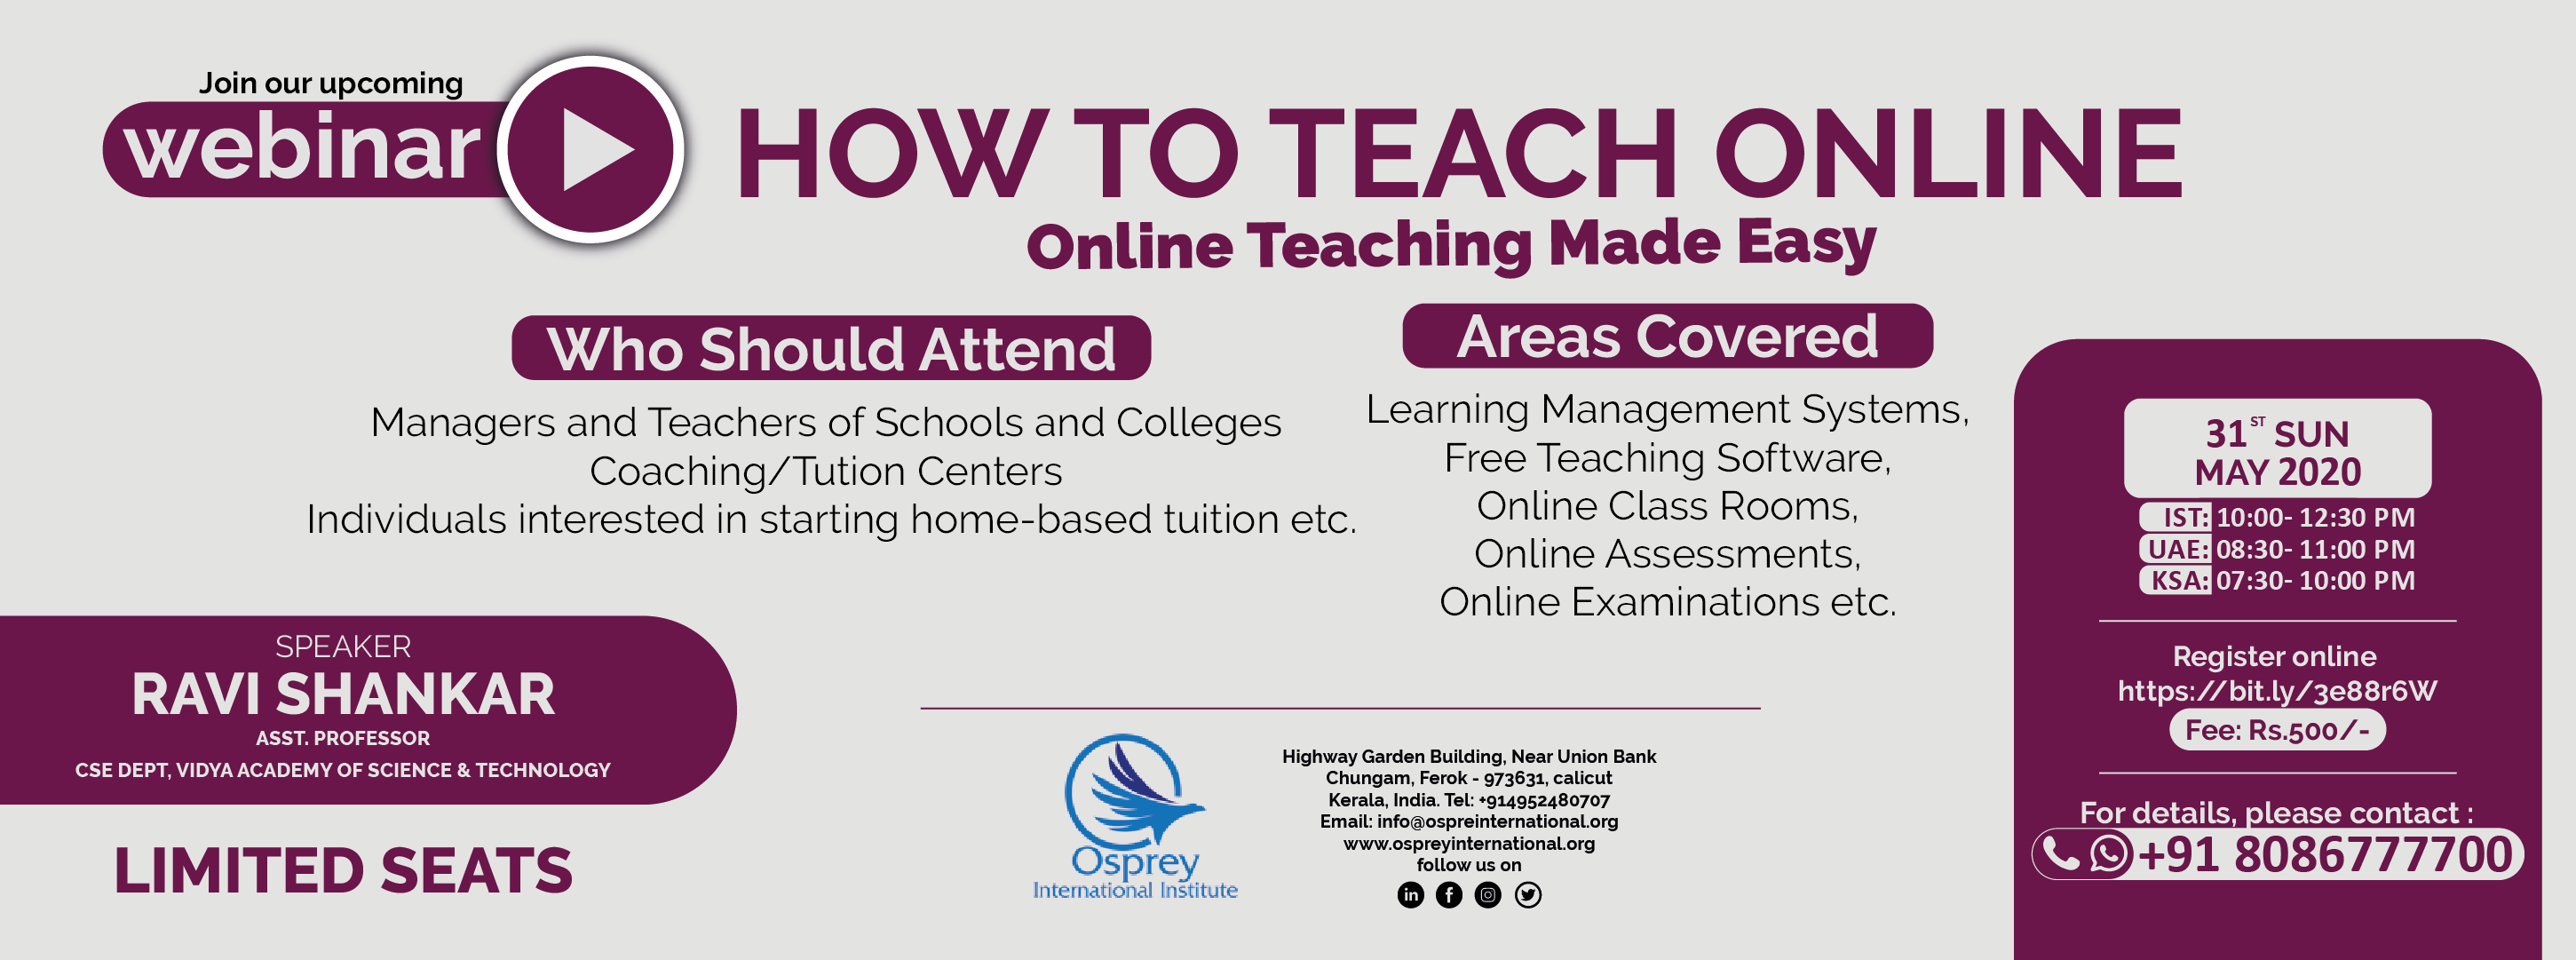 Osprey International Teach Online